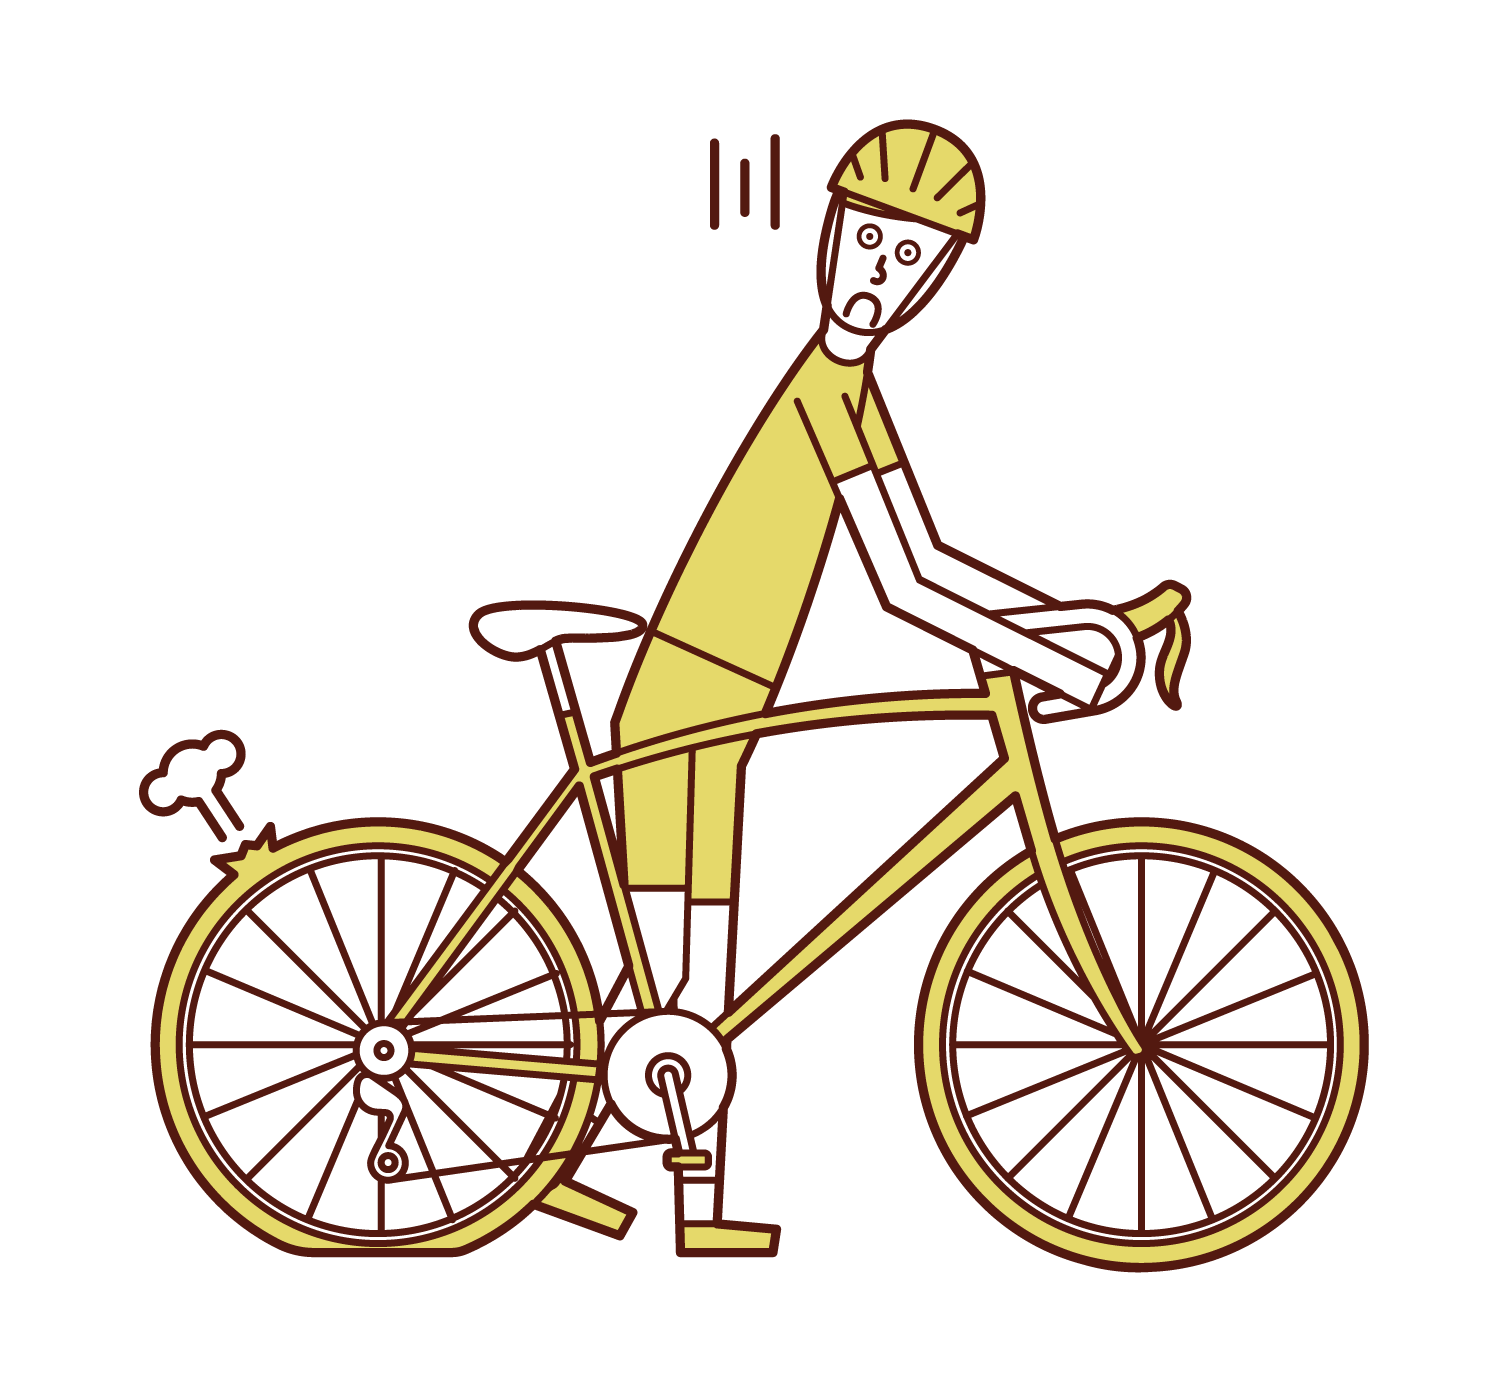 Illustration of a man pushing a flat-hit bicycle